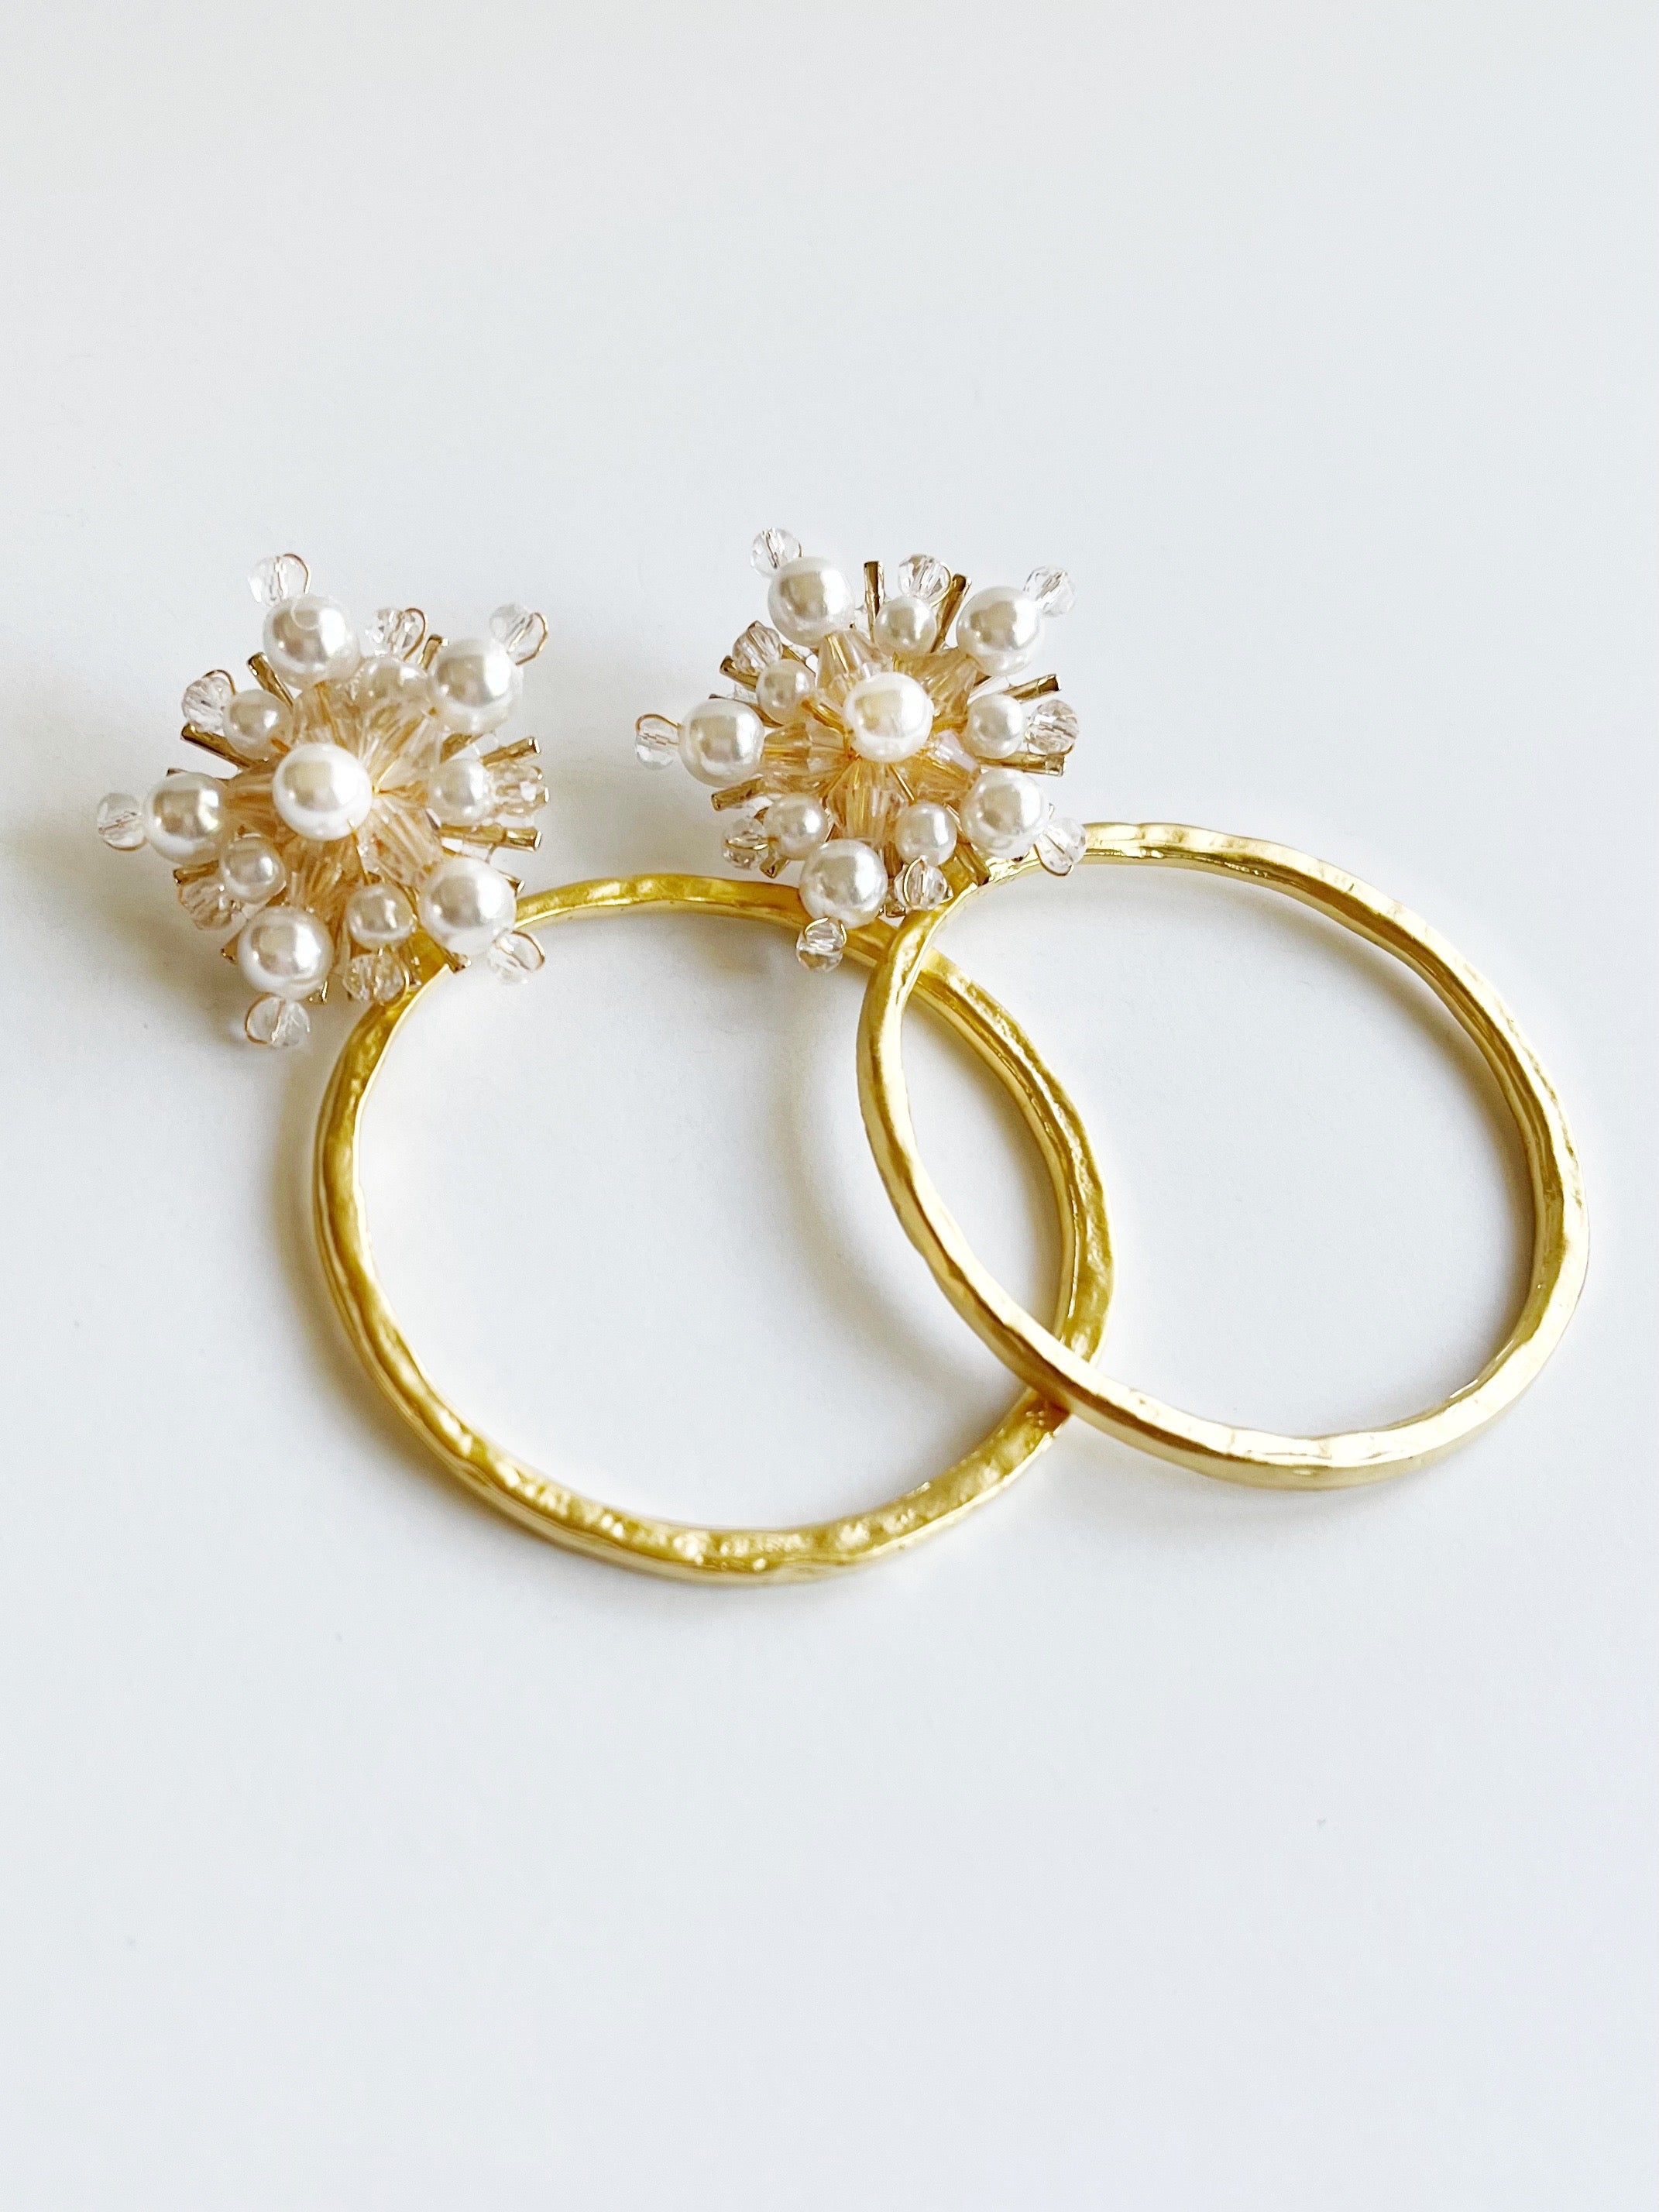 14K Akoya Pearl & Pink Topaz Cluster Earrings | LUNESSA